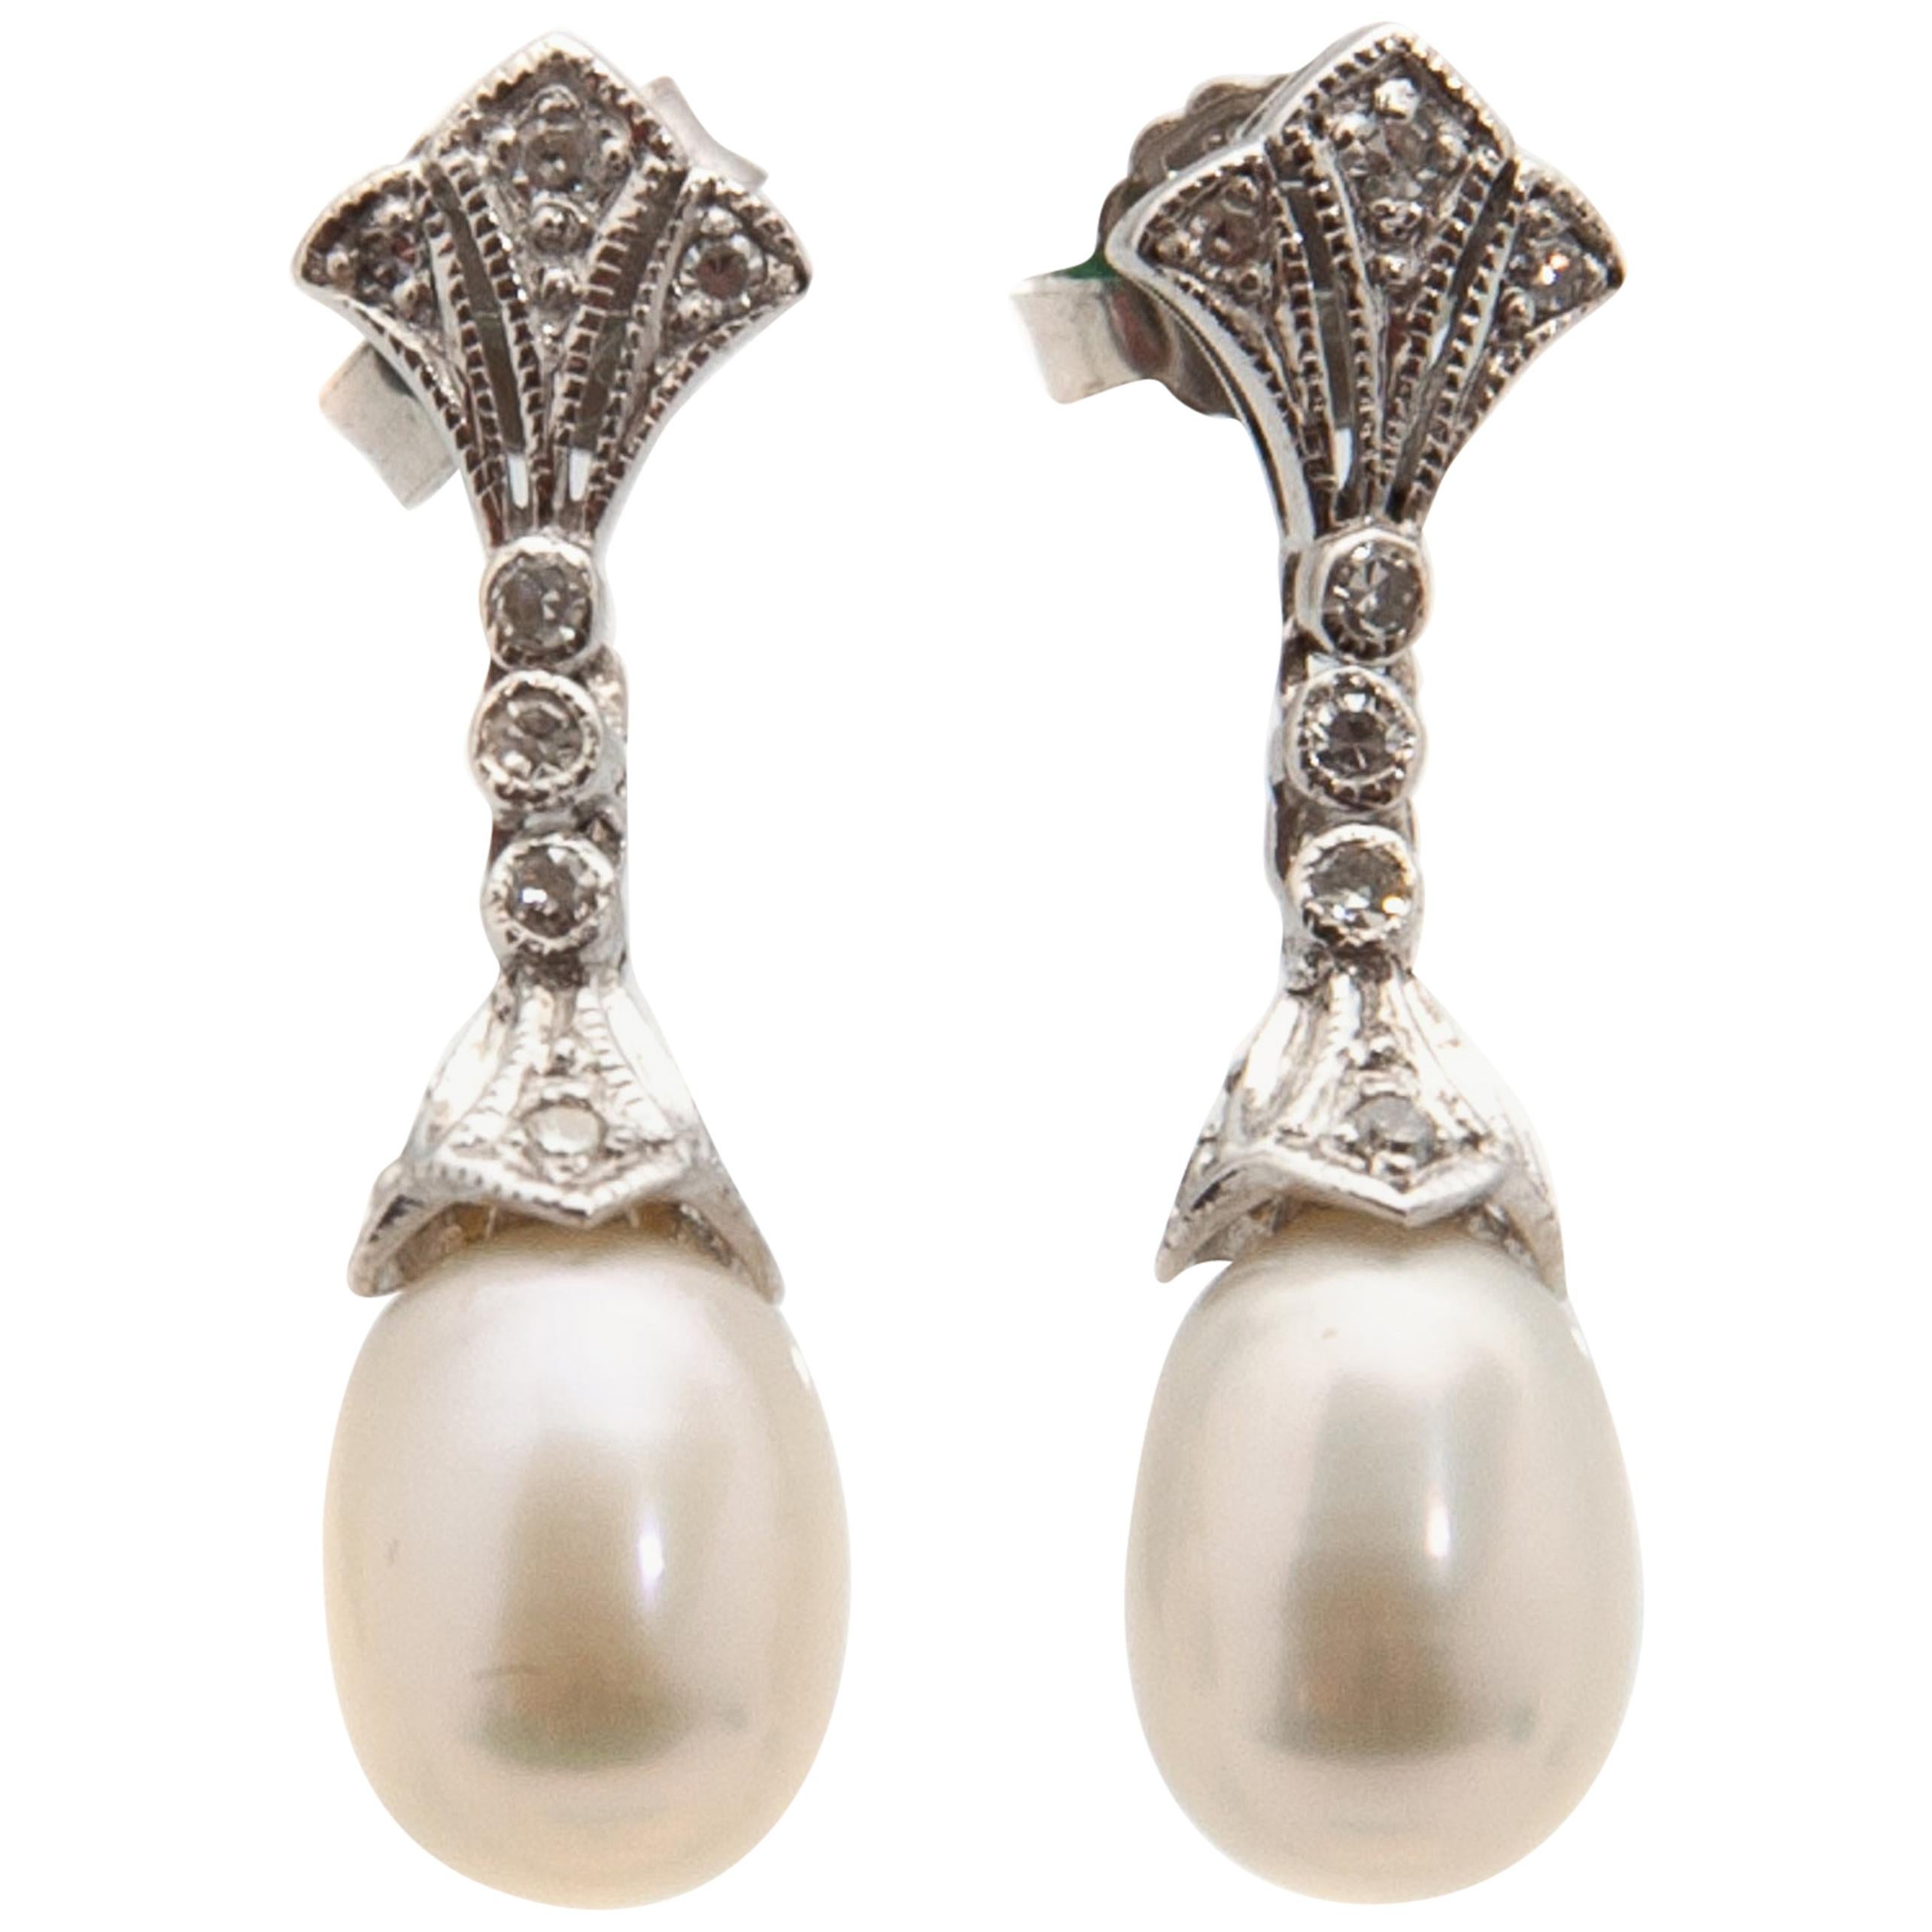 Art Deco Diamond Pearl 14 Karat White Gold Drop Earrings